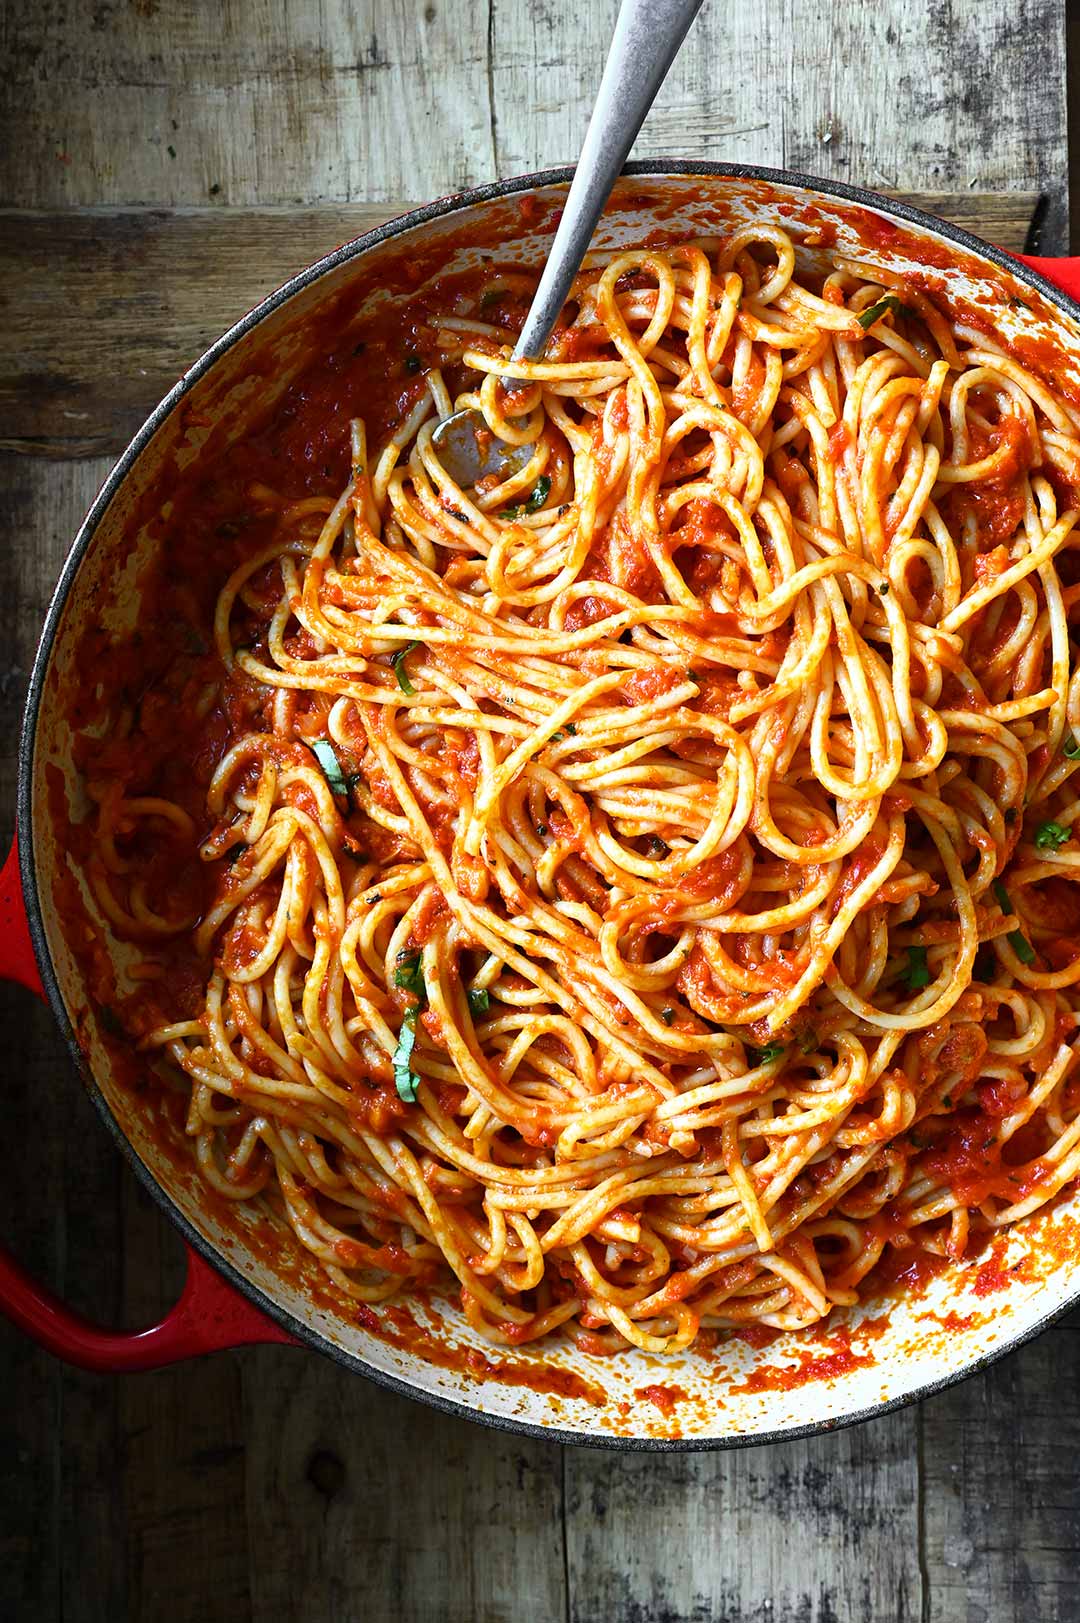 garlic butter tomato spaghetti